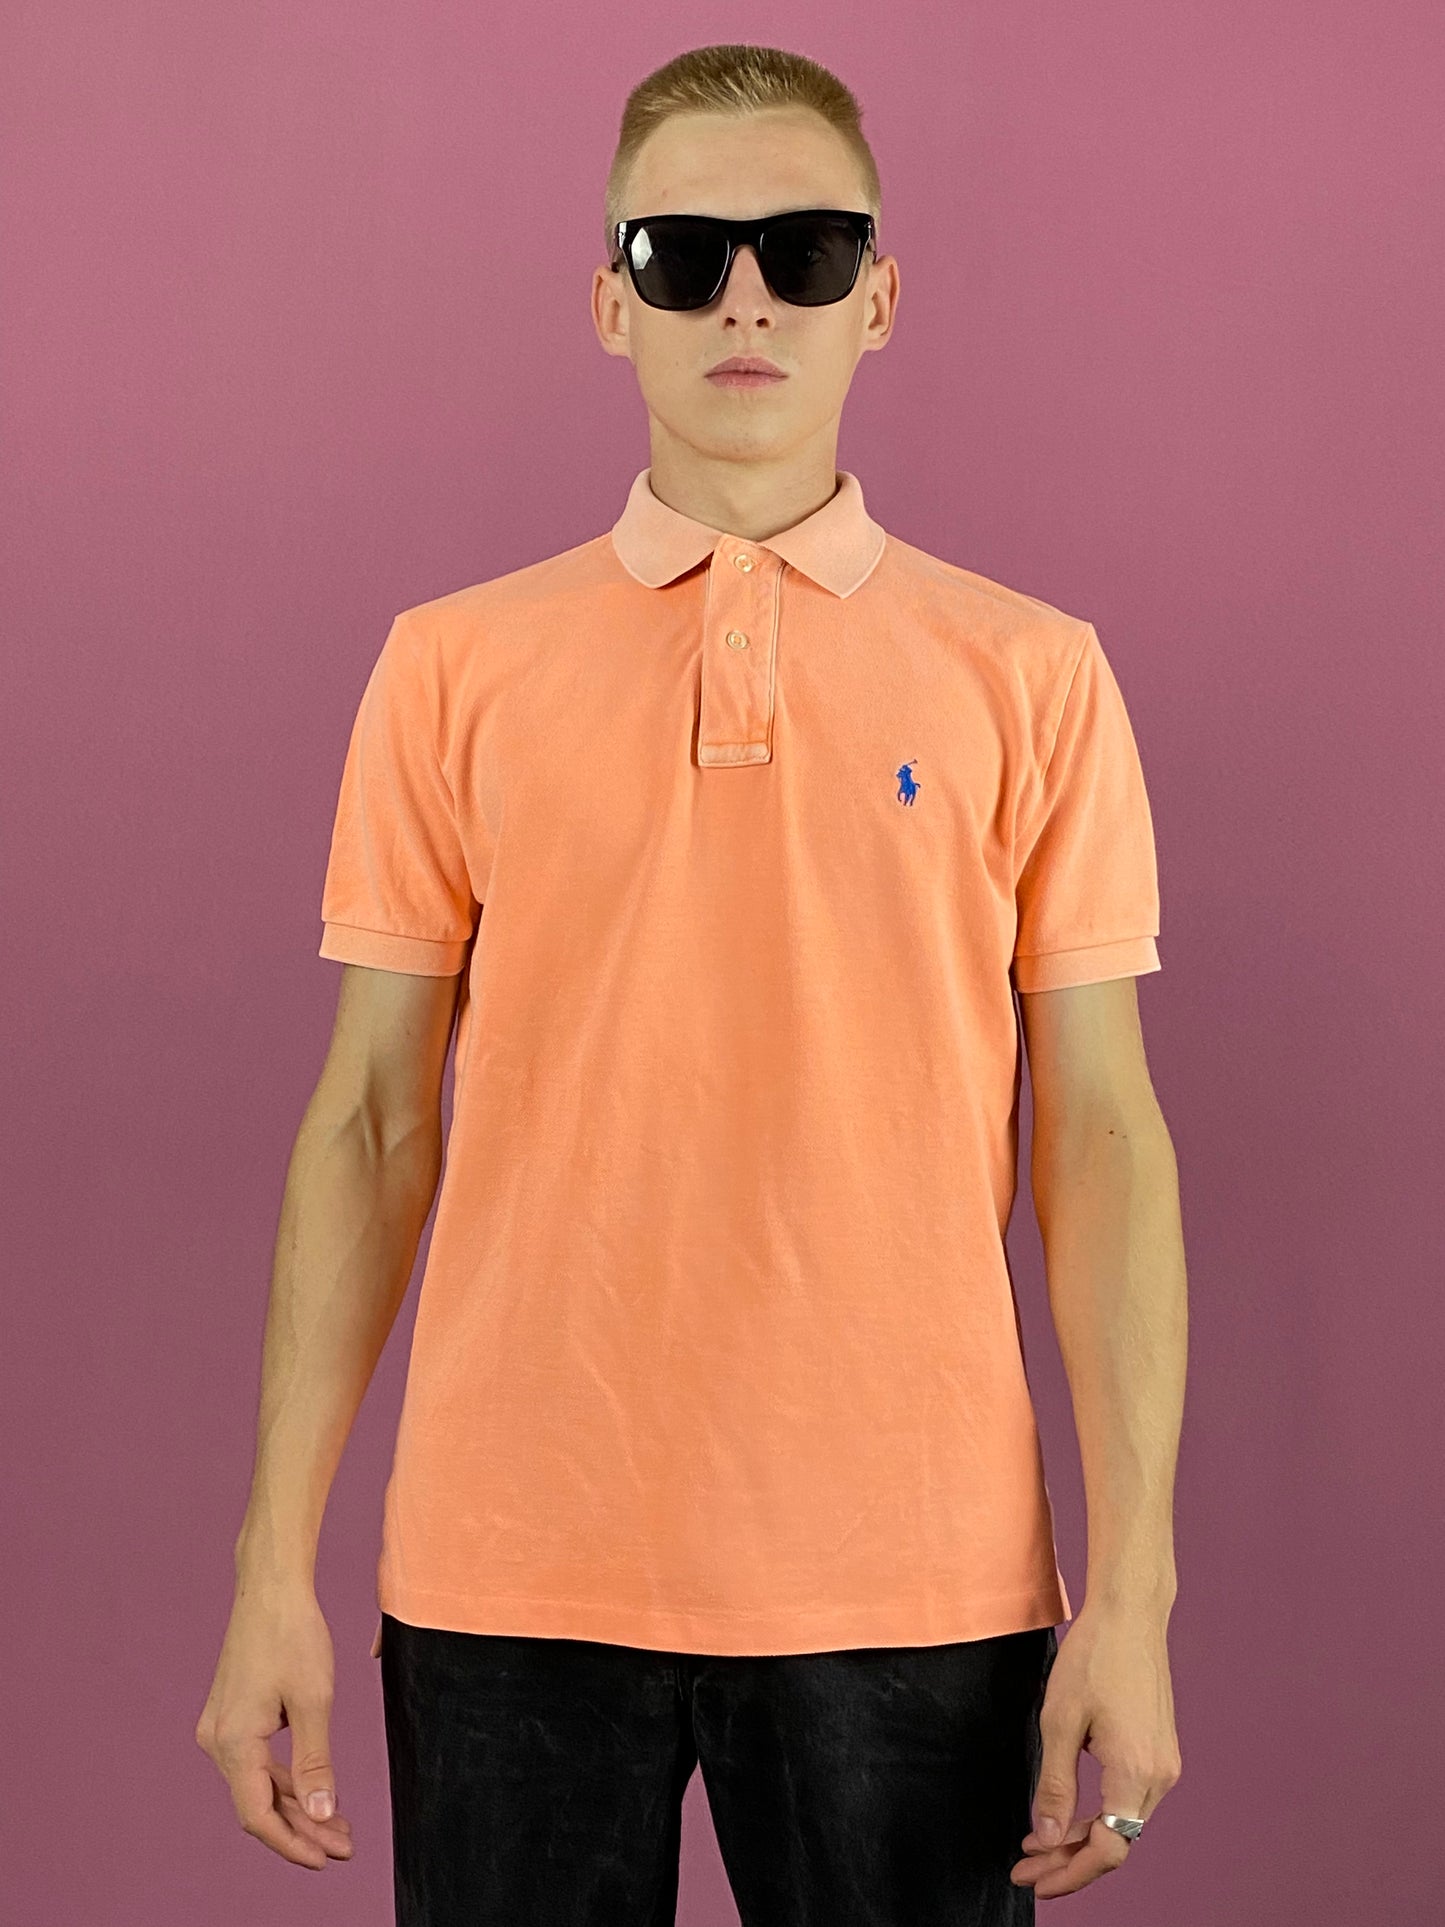 Polo Ralph Lauren Vintage Men's Polo Shirt - Small Orange Cotton